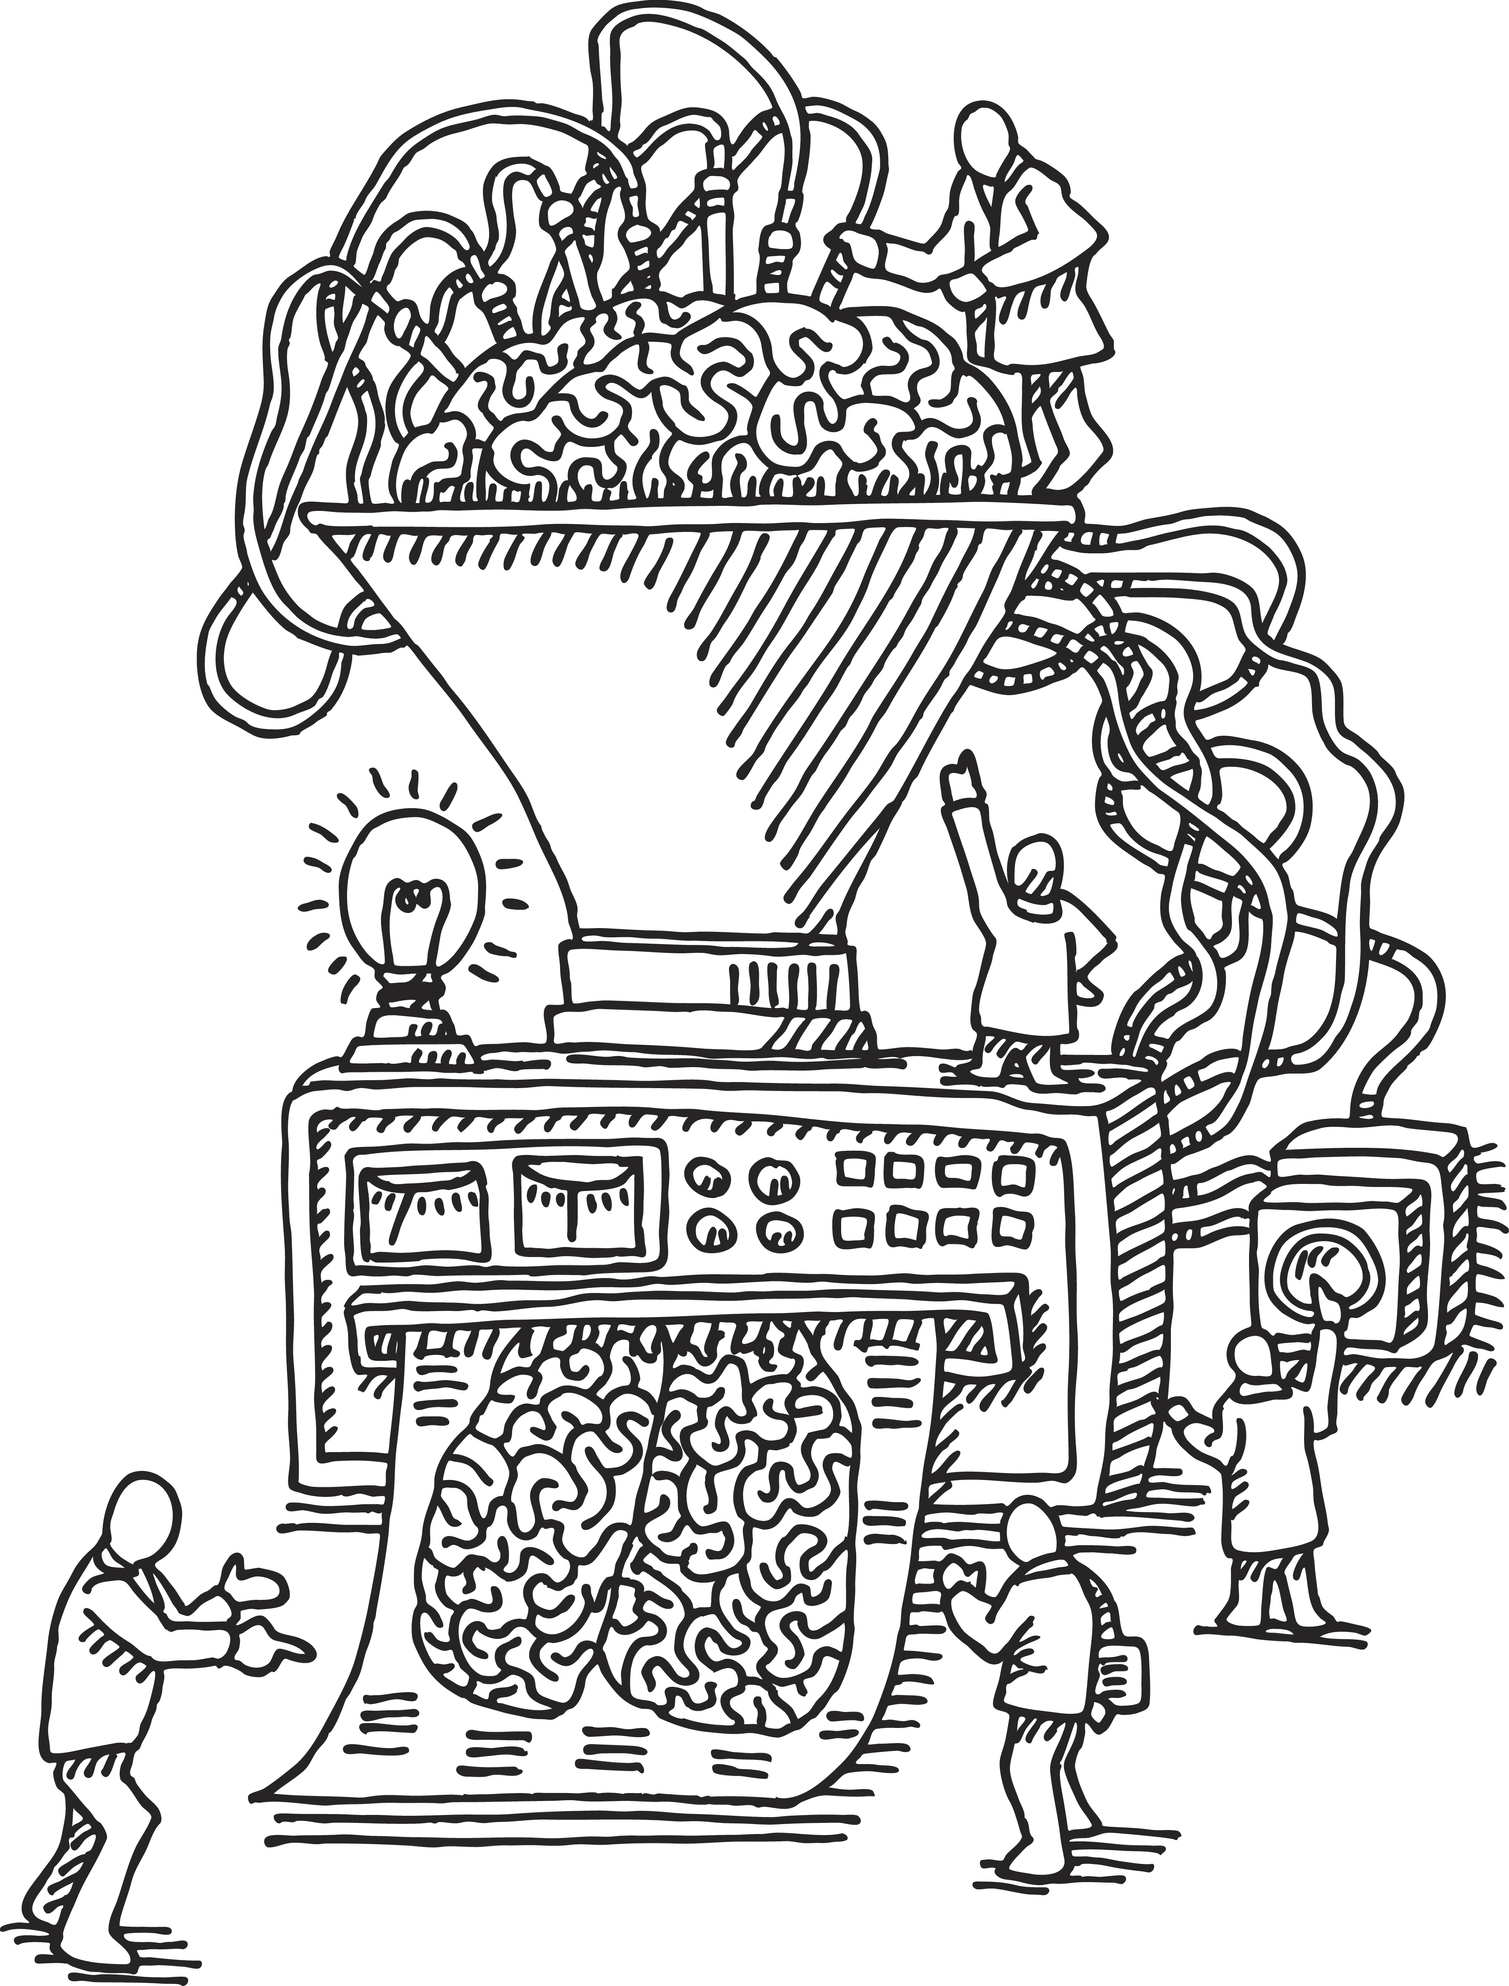 Illustration of a brain exam